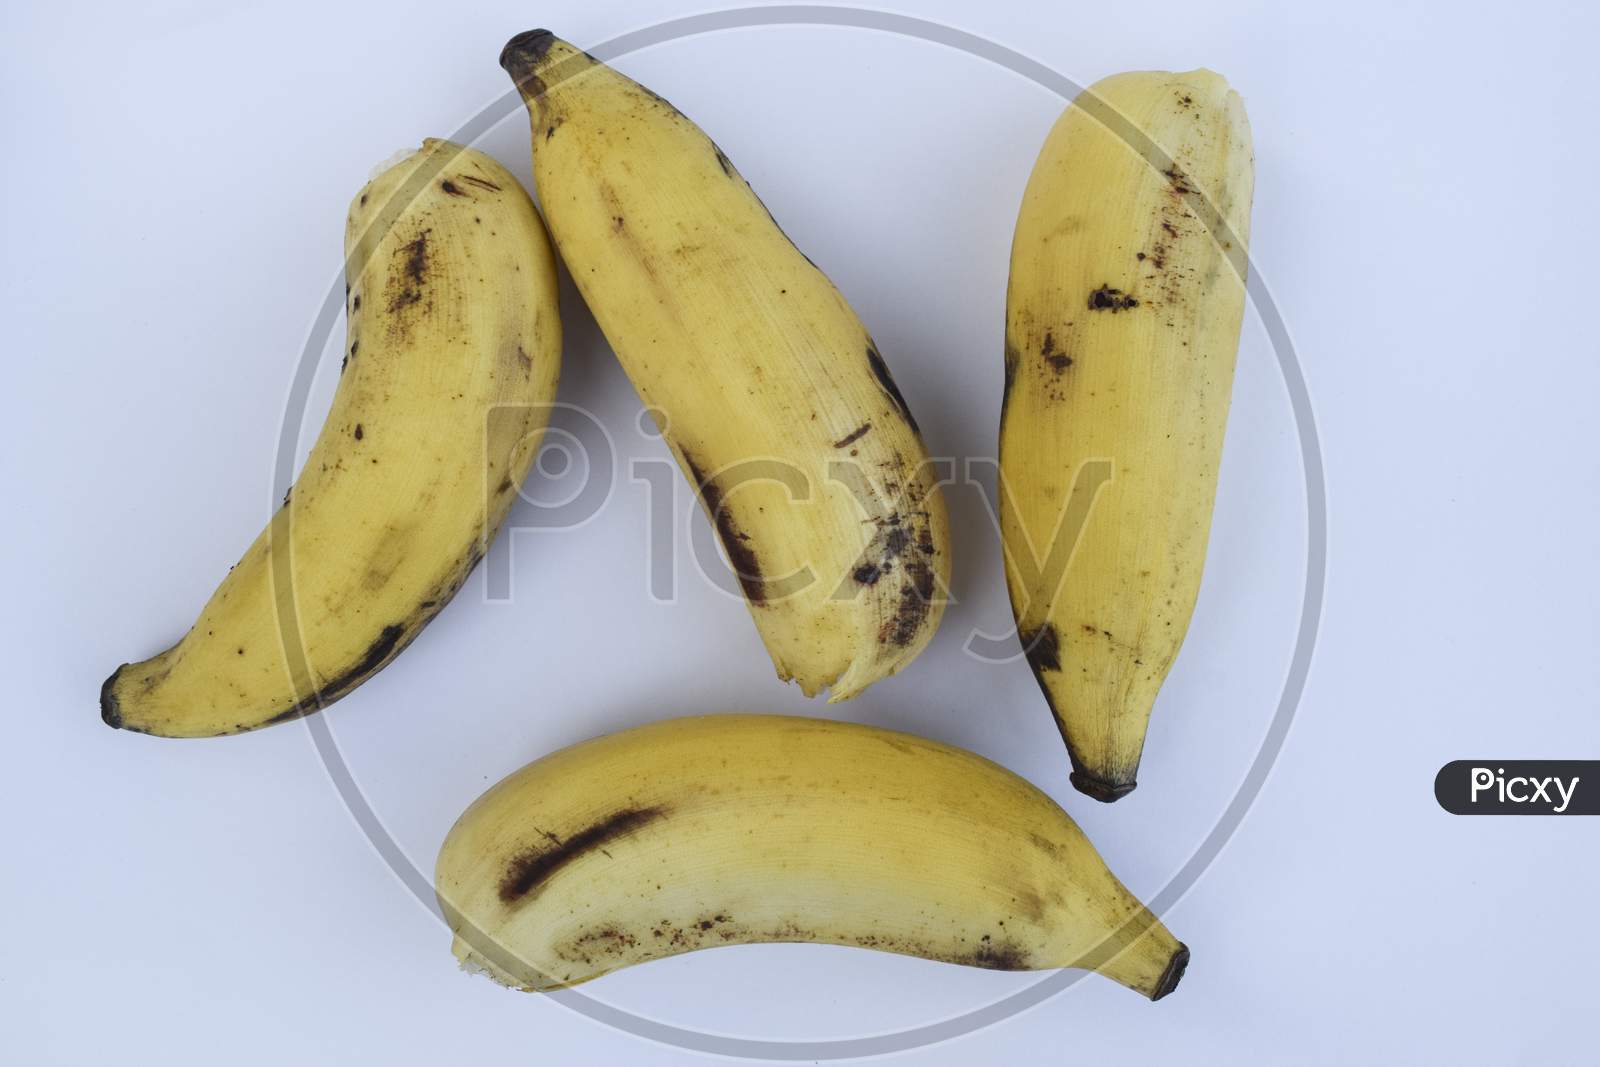 Small Size Yellow Bananas Tasty Cardamom Banana Also Known As Elaichi Kela In Hindi. Yellow Banana Bunch On White Background